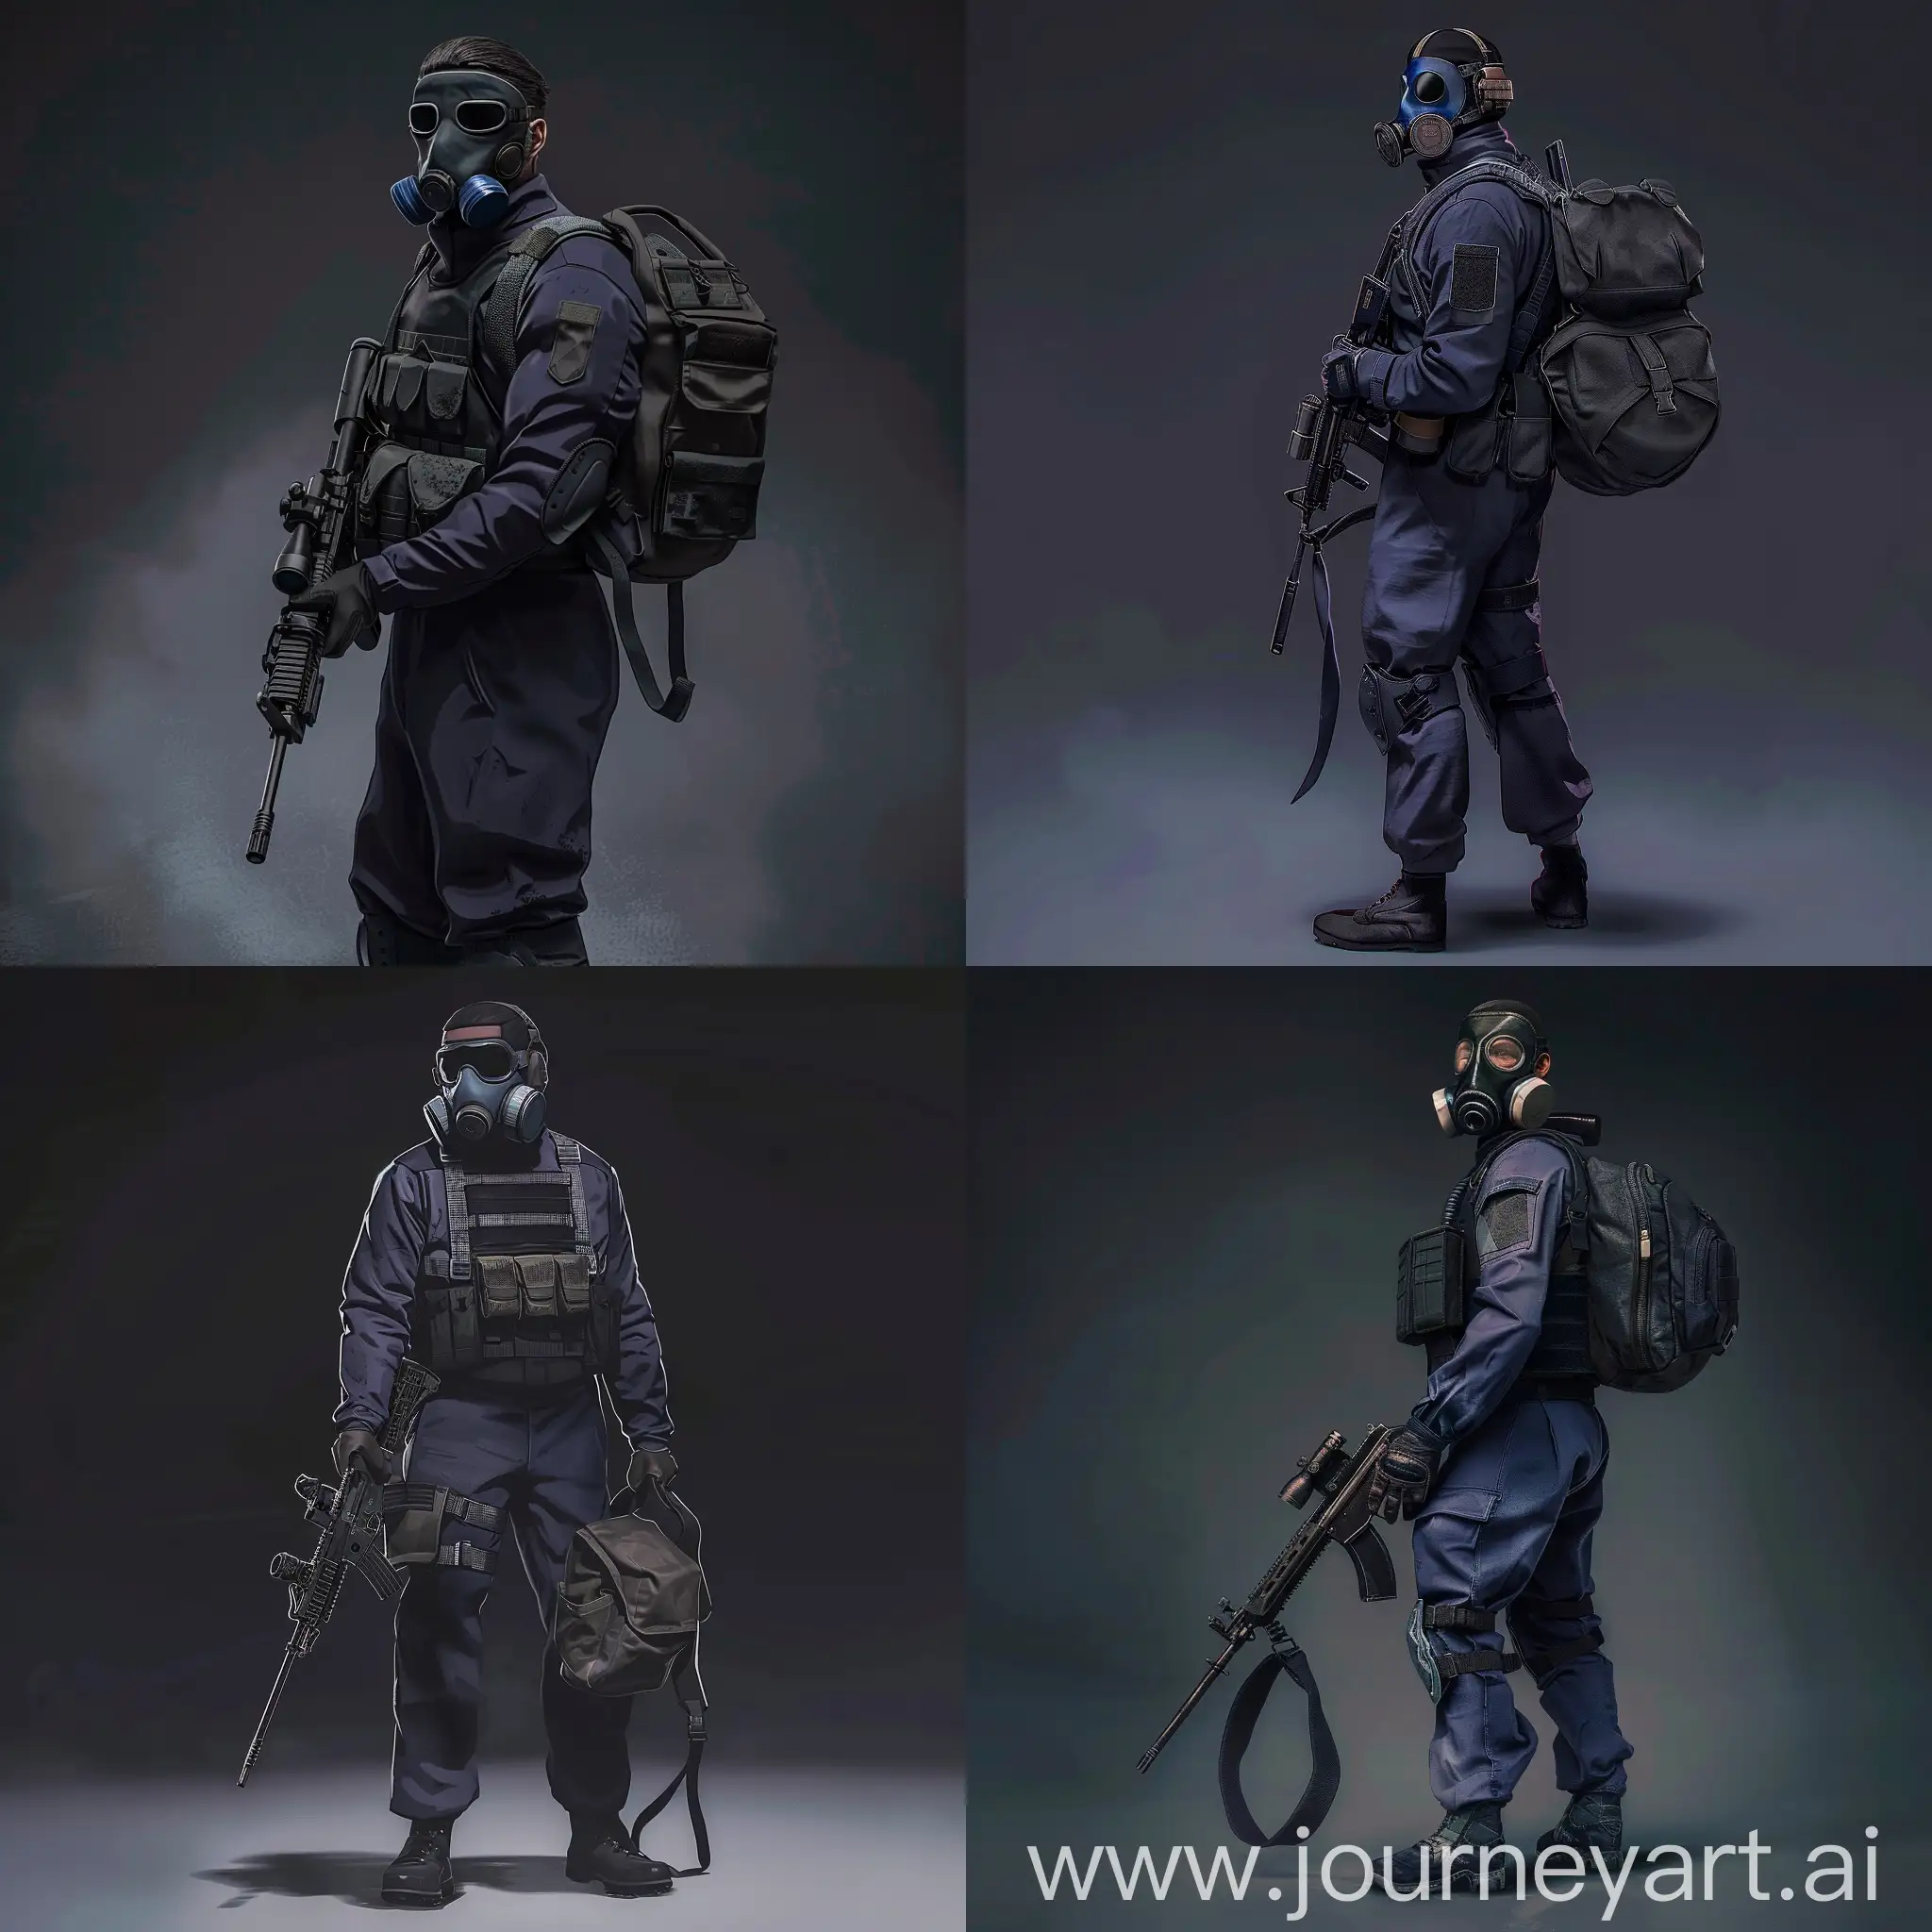 Mercenary-in-Dark-Purple-Military-Jumpsuit-with-Sniper-Rifle